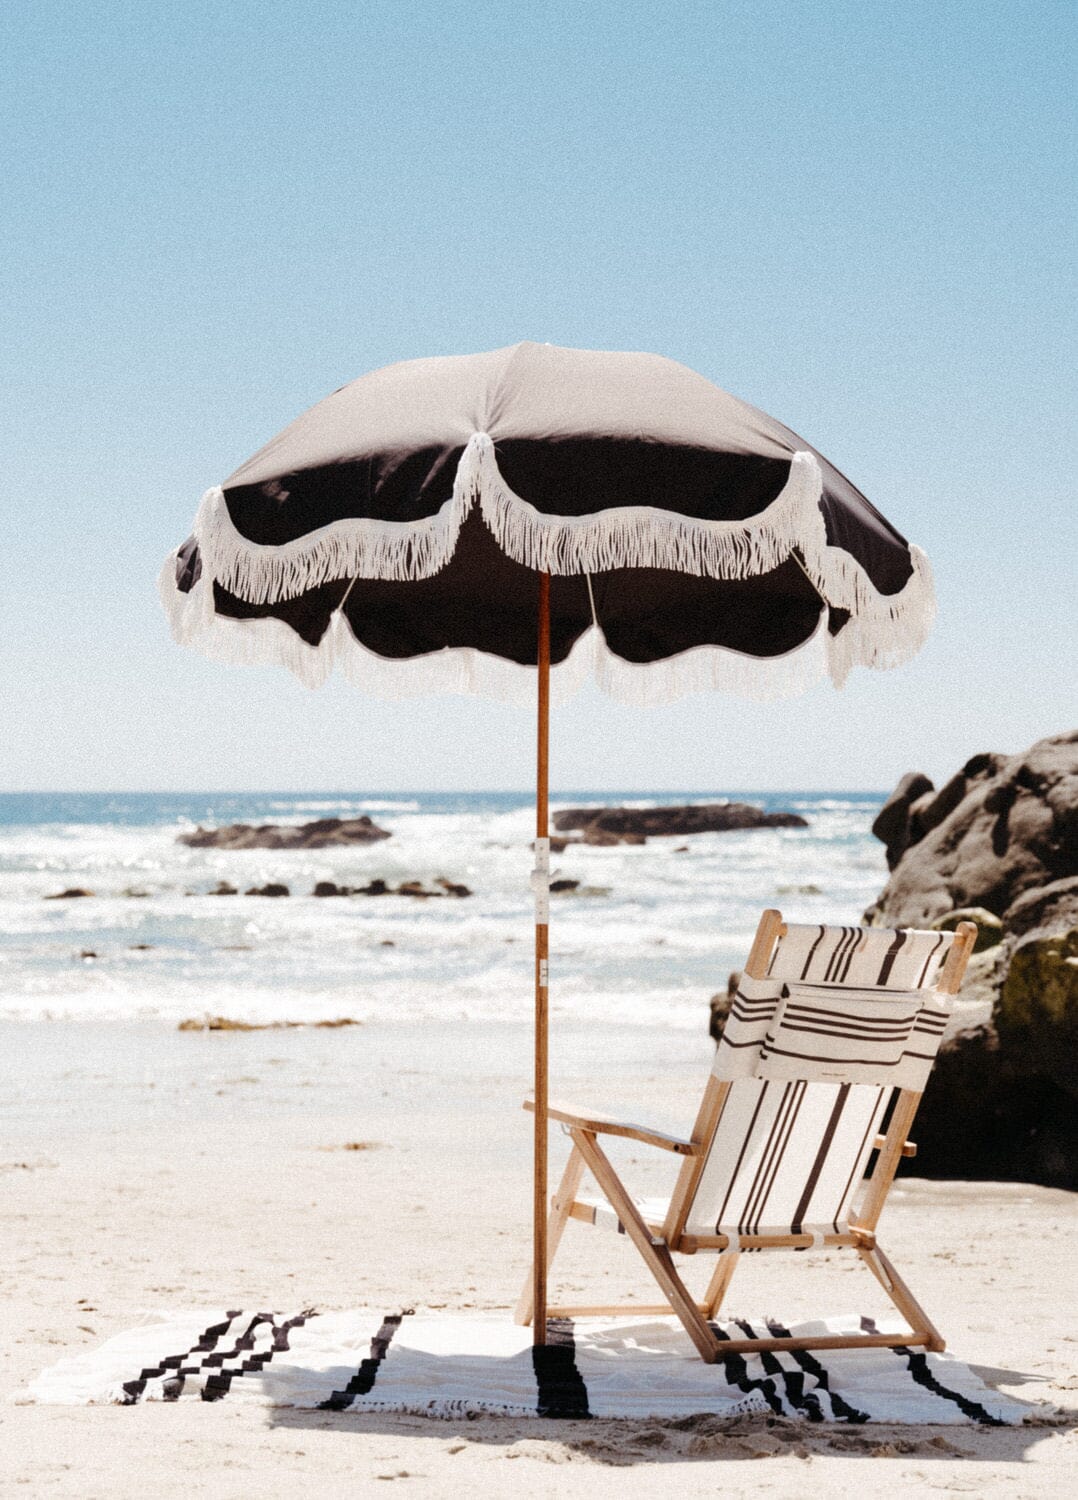 The Holiday Beach Umbrella - Vintage Black Holiday Beach Umbrella Business & Pleasure Co 